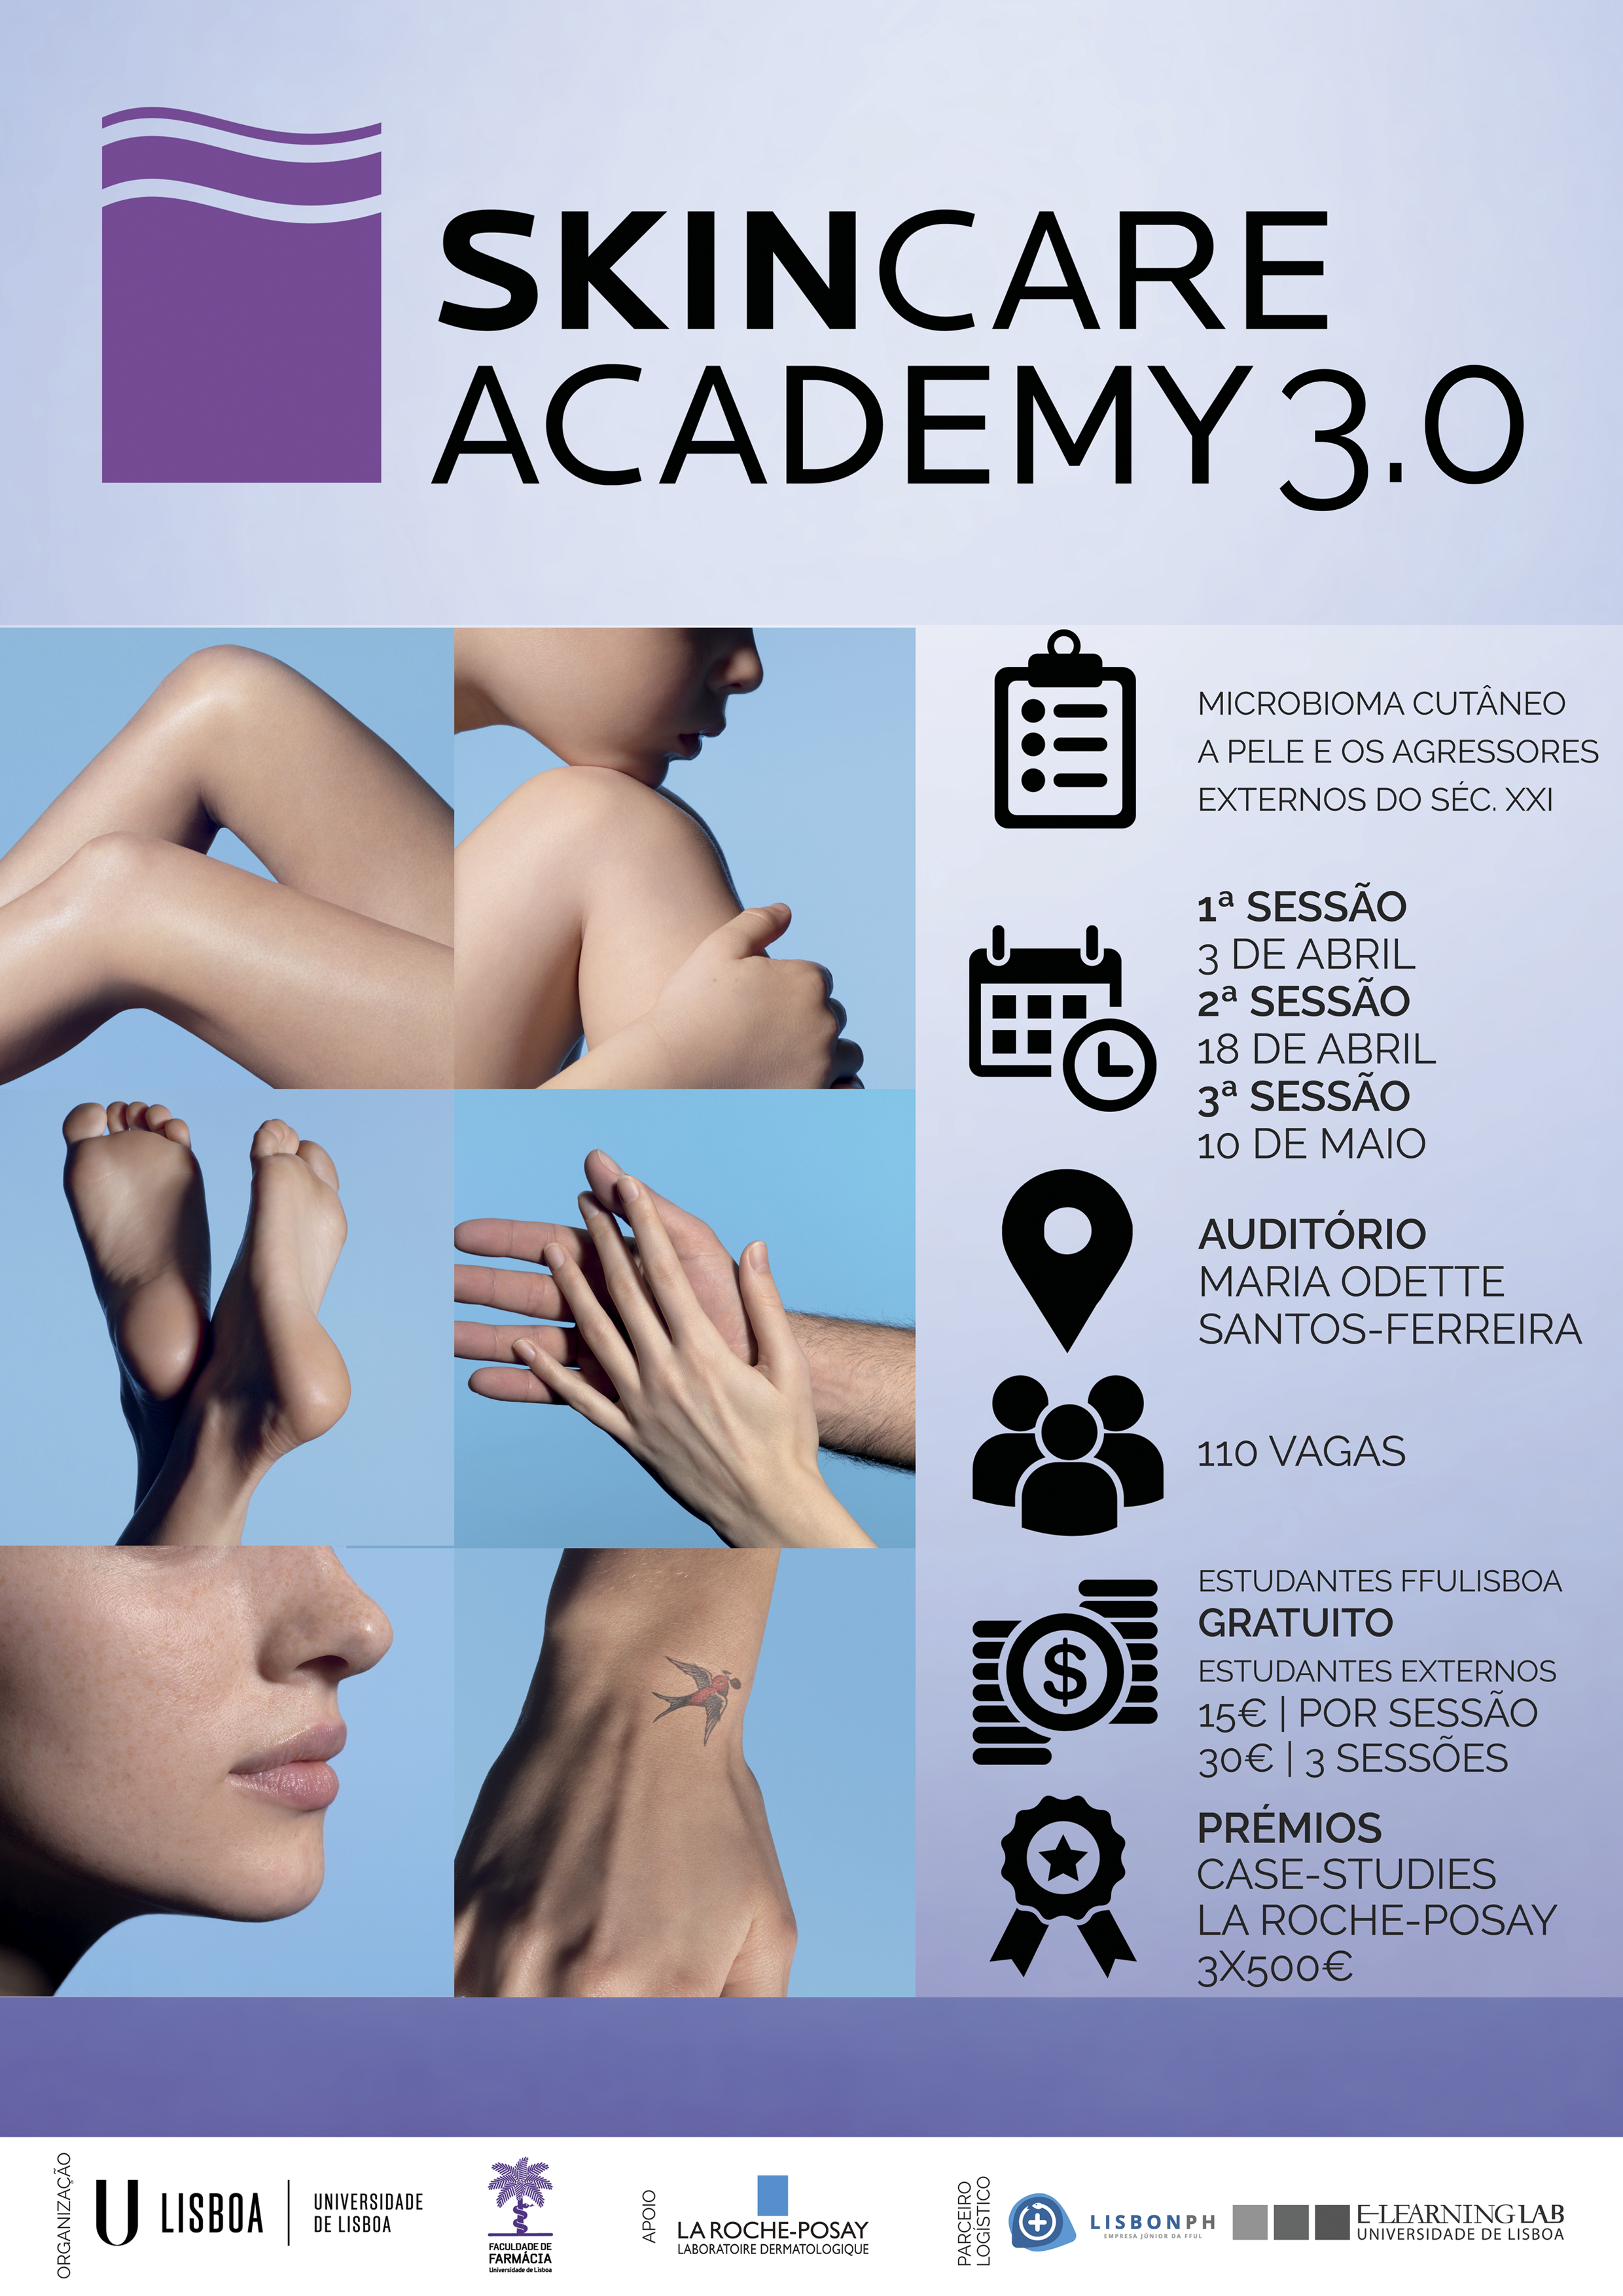 SkinCare Academy 3.0